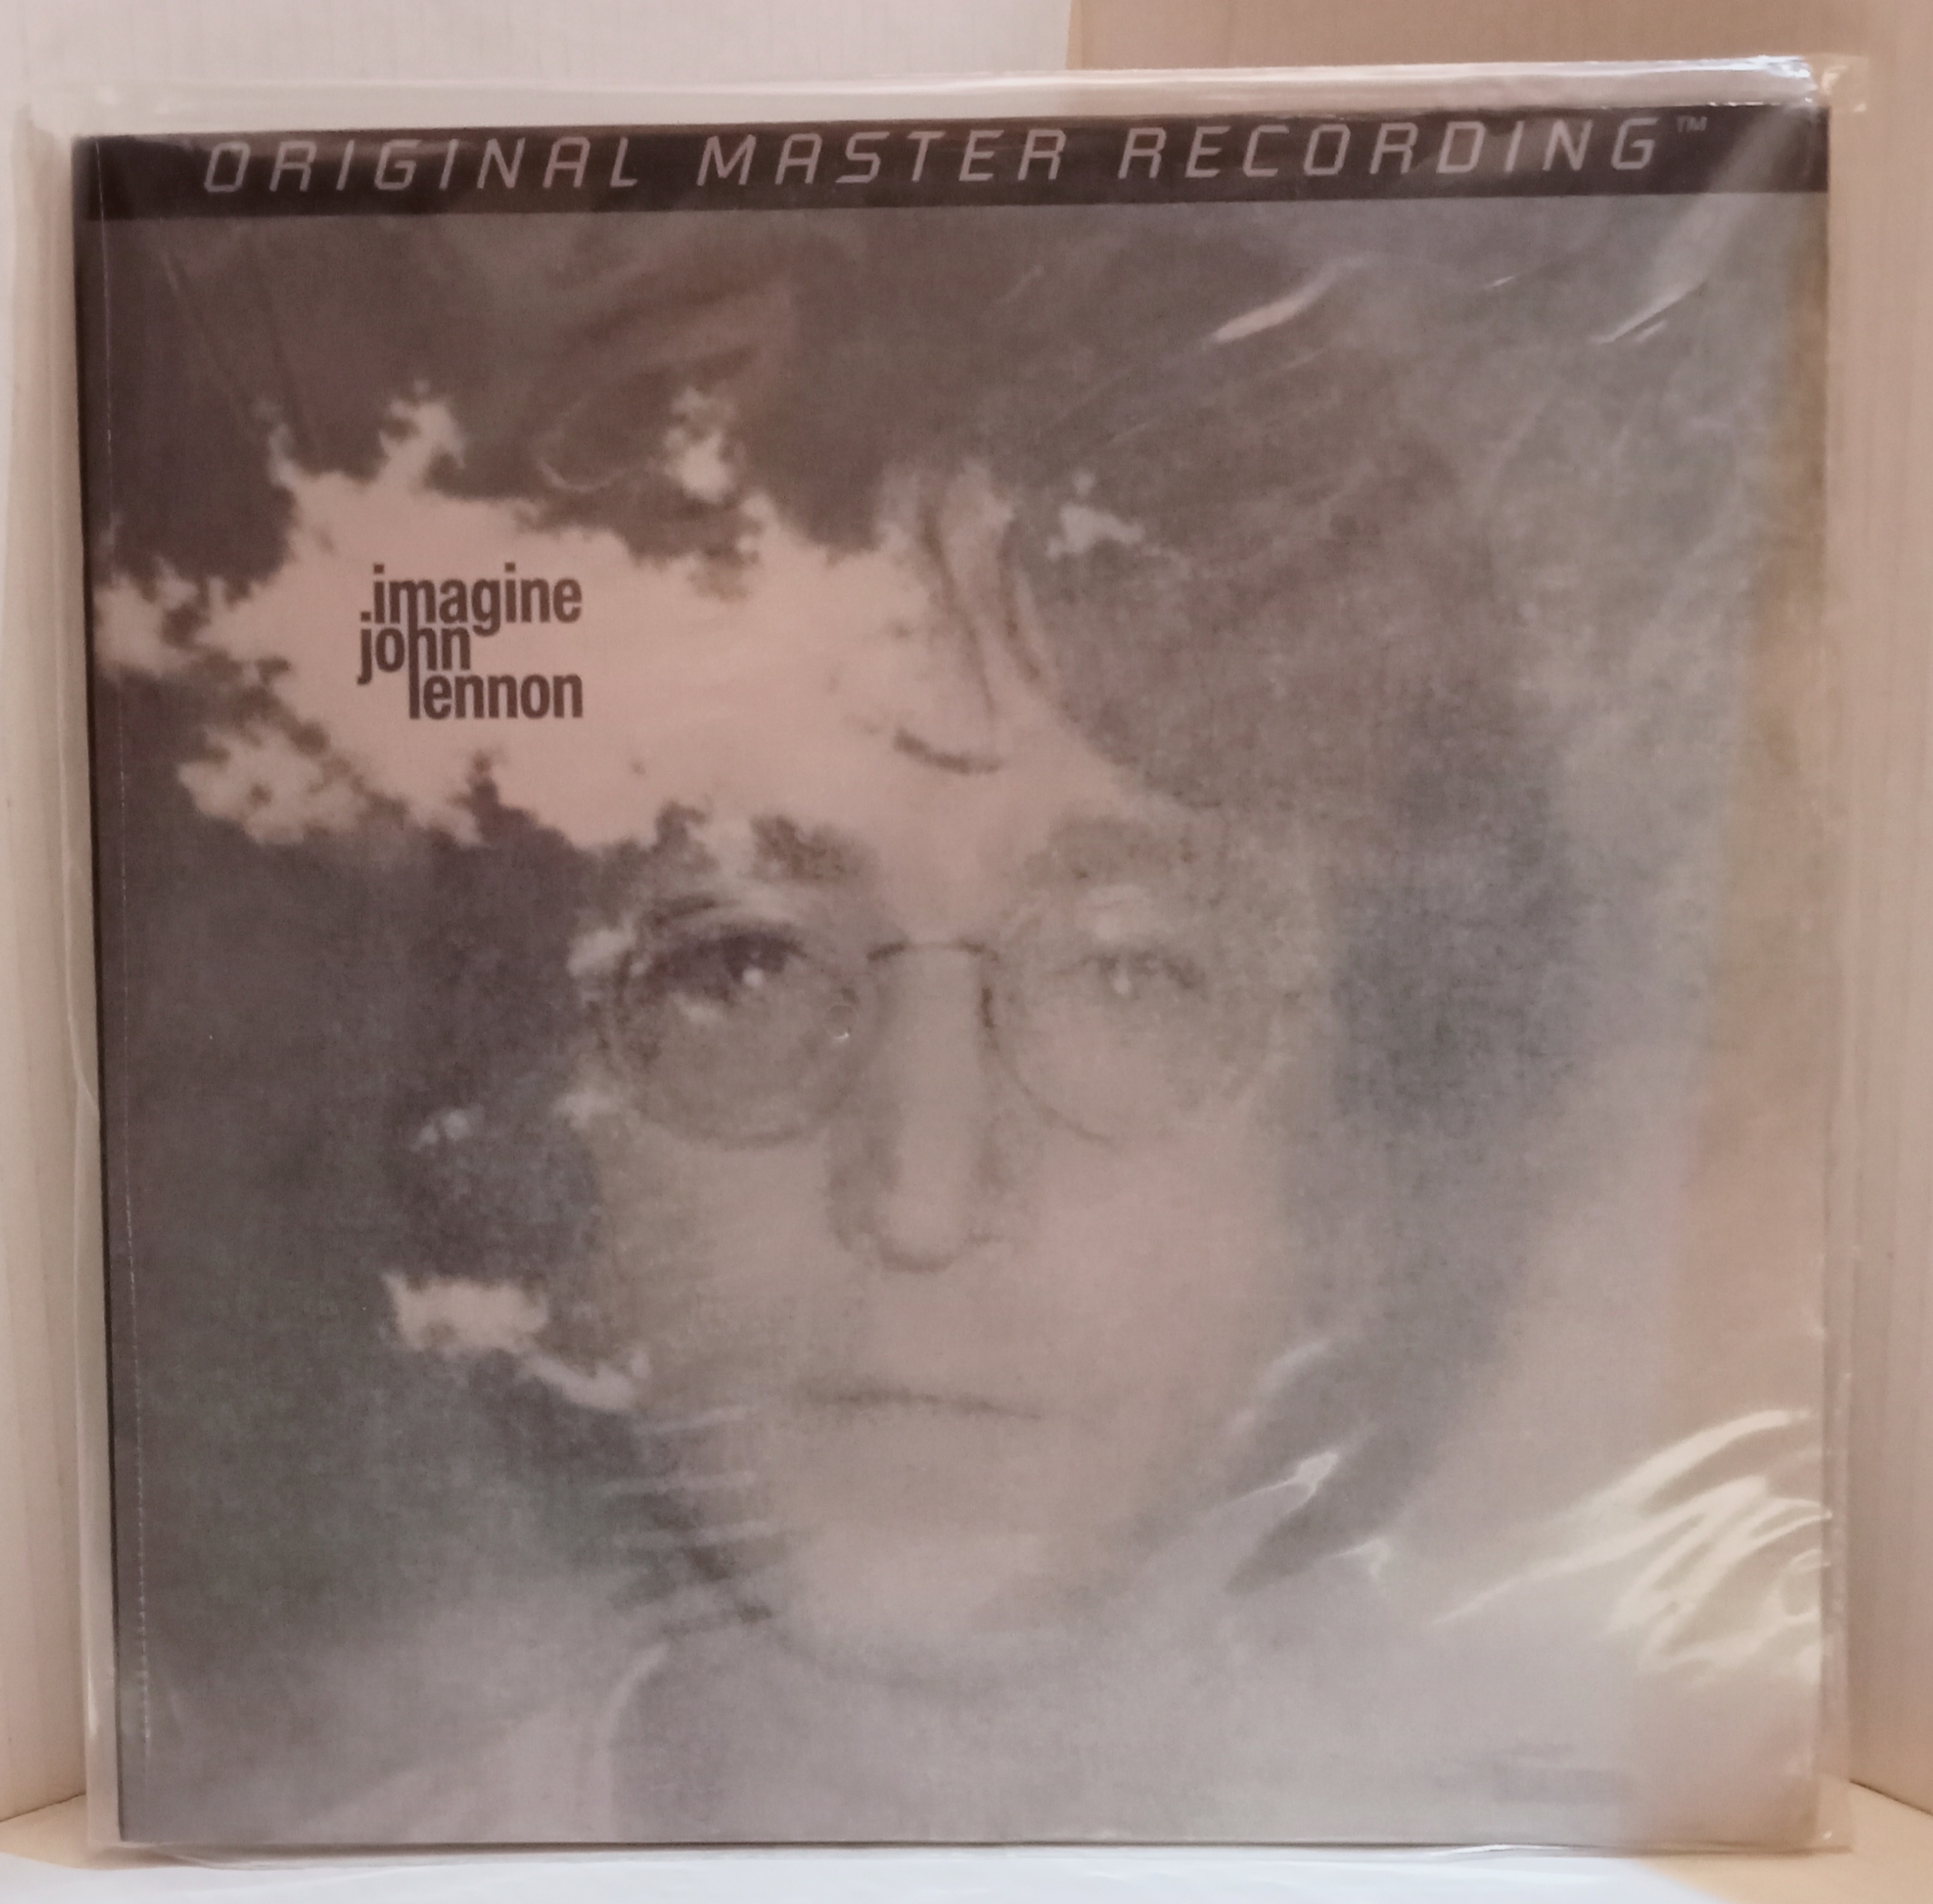 John Lennon Imagine Original Master Recording GAIN 2 issued by Mobile Fidelity Sound Lab 2003,